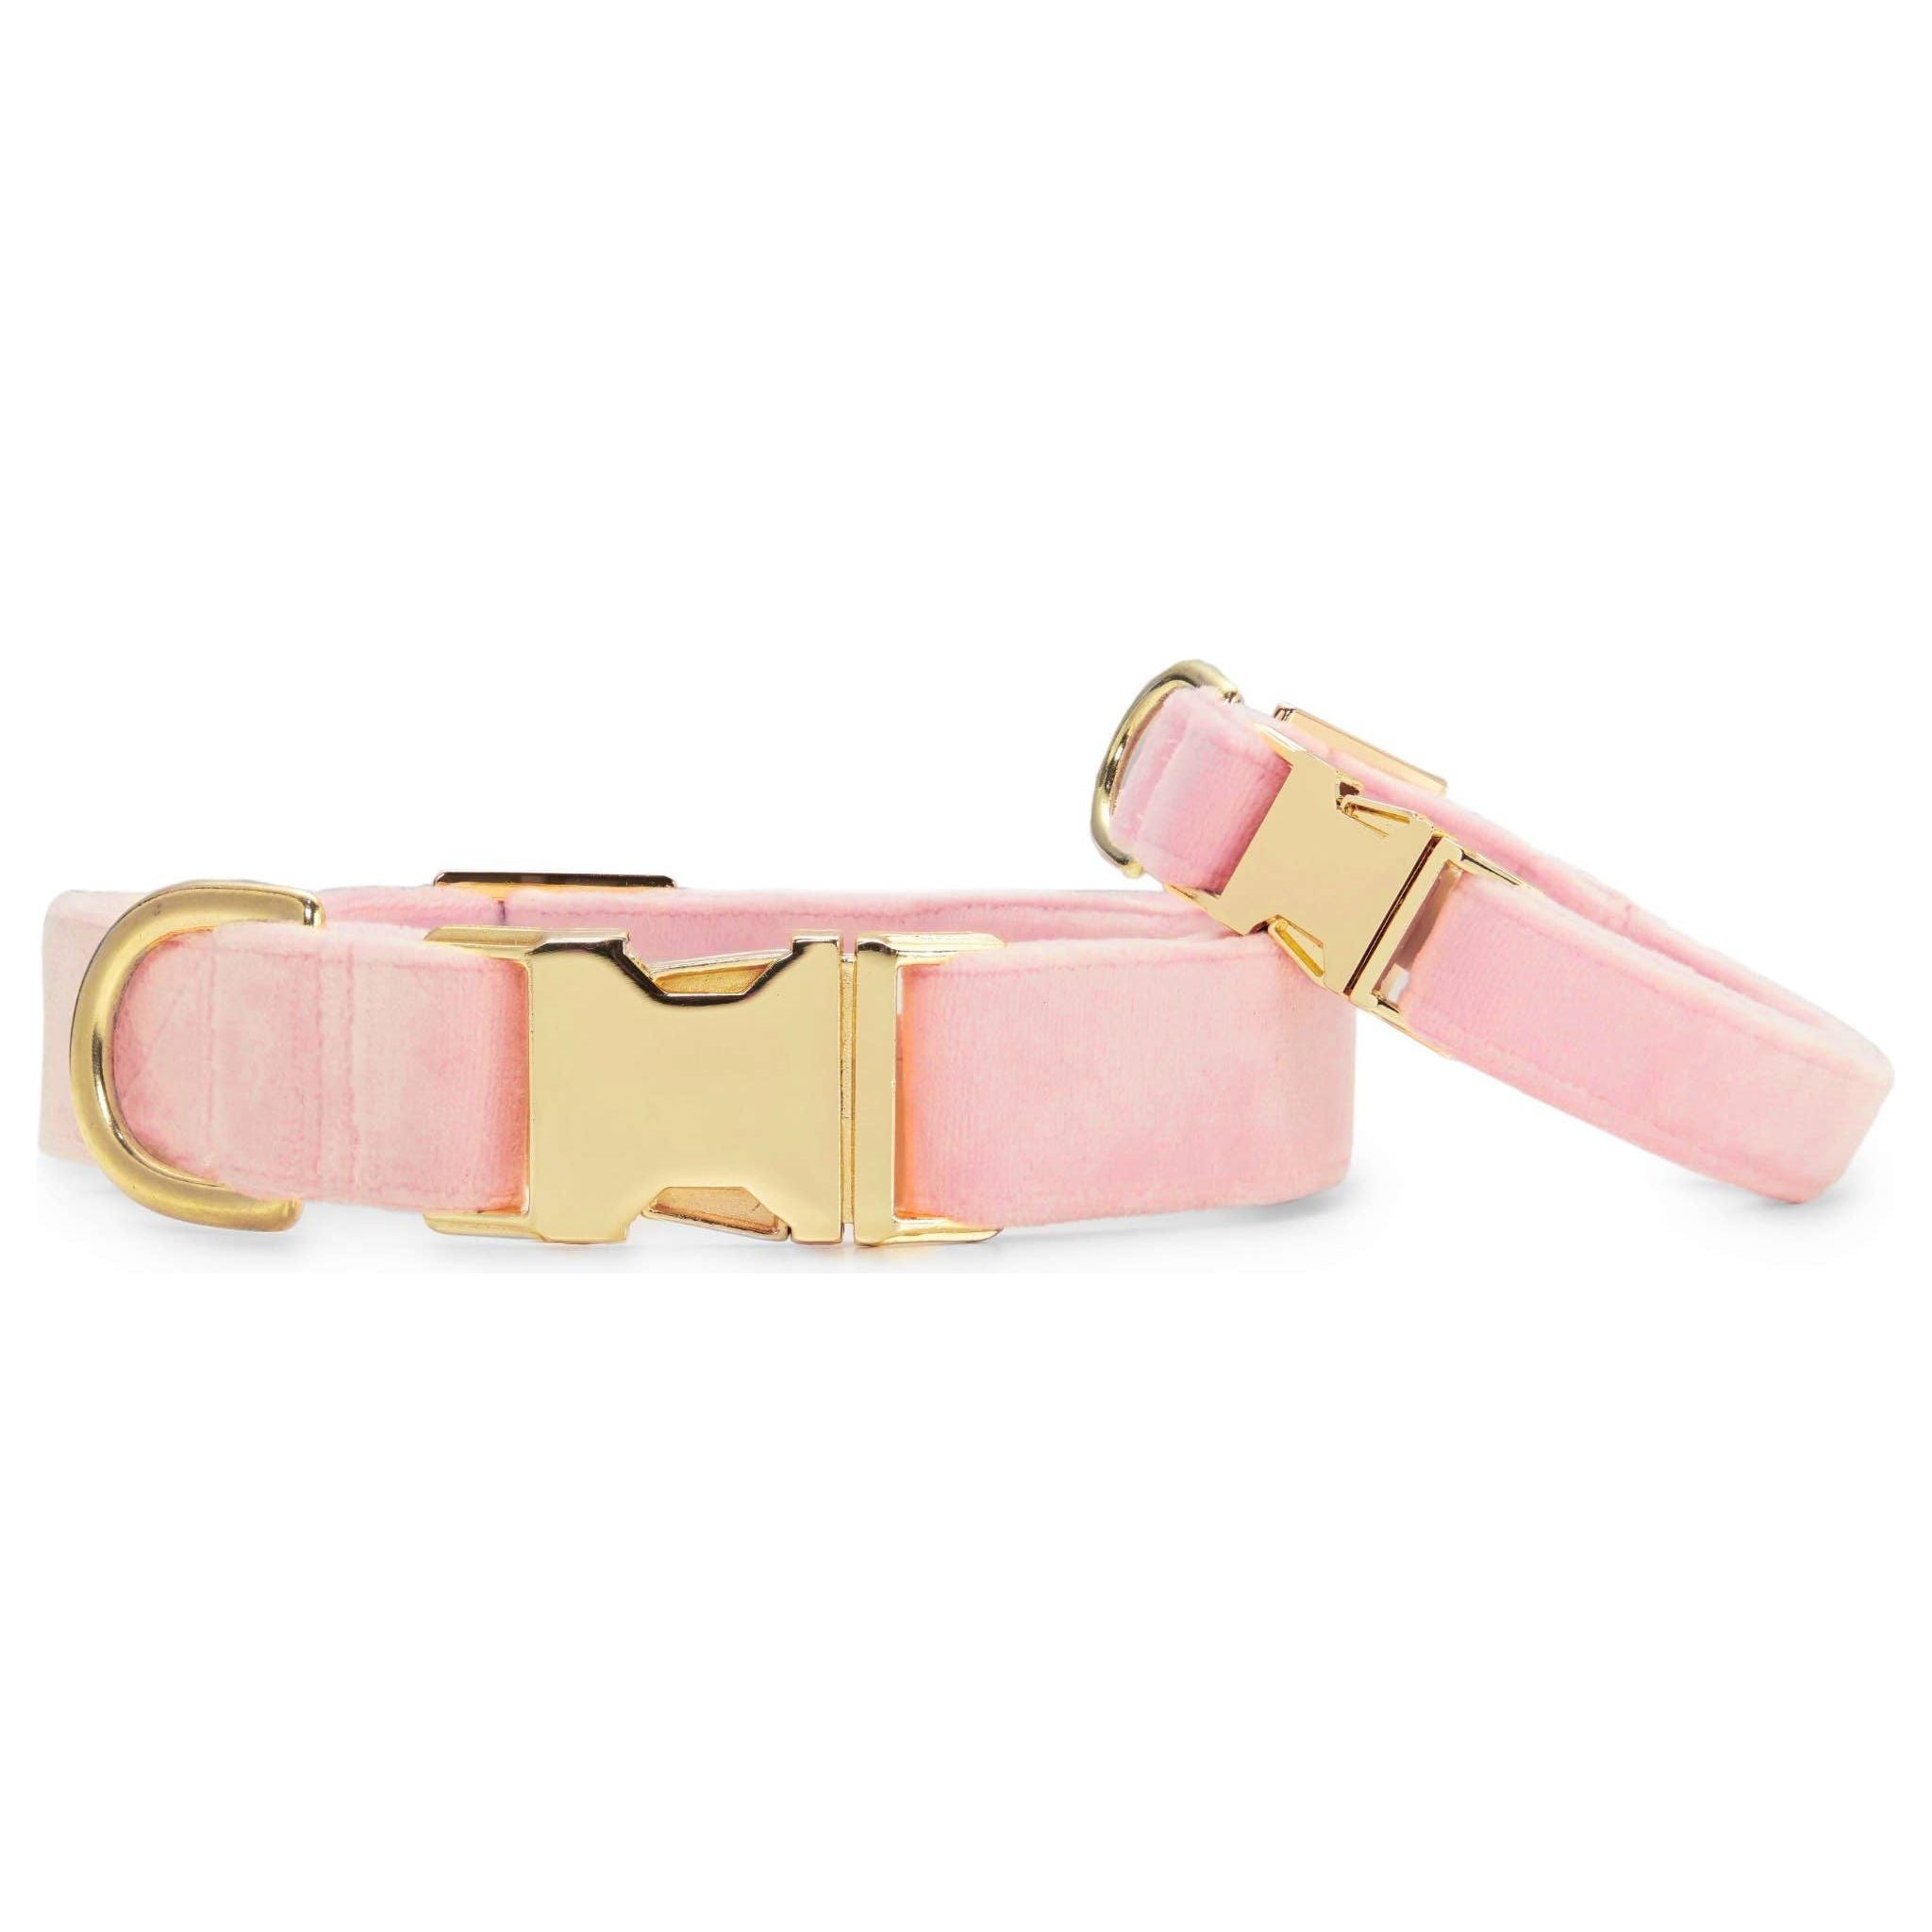 The Foggy Dog Blush Pink Velvet Dog Collar